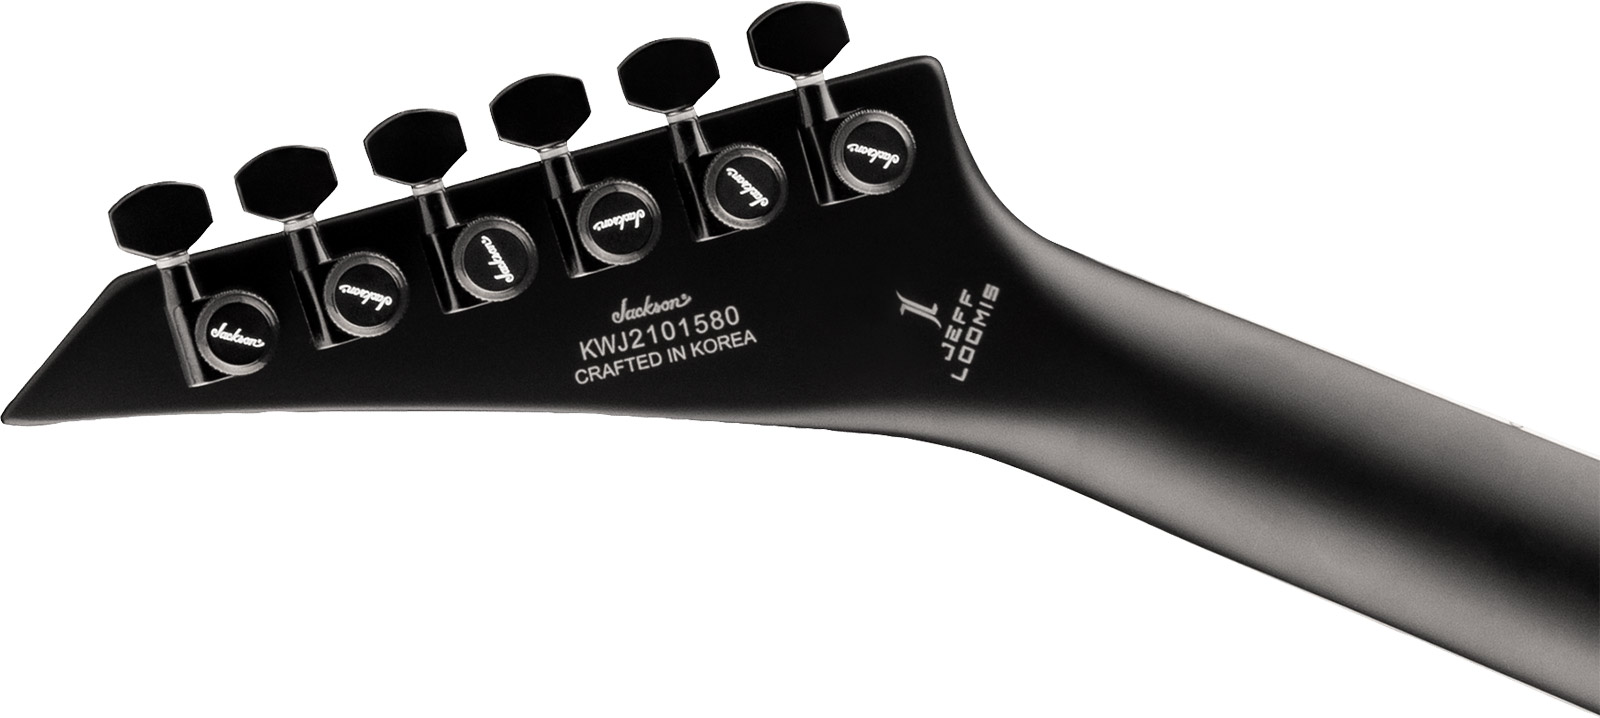 Jackson Jeff Loomis Kelly Ht6 Ash Pro Ltd Signature 2h Seymour Duncan Ht Eb - Black - Metal electric guitar - Variation 3